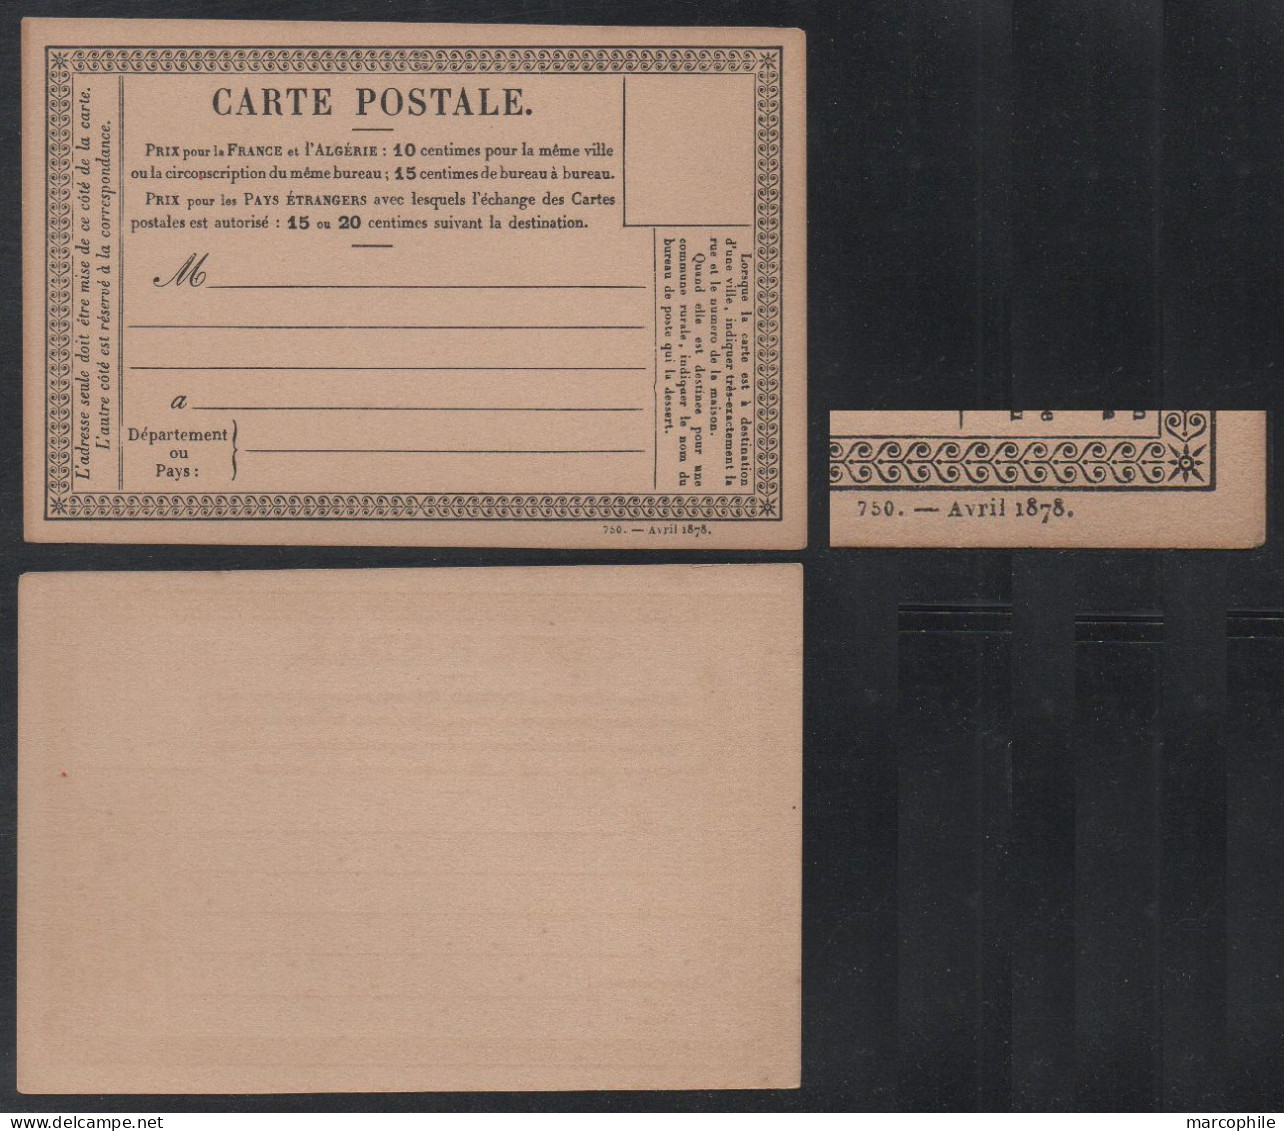 CARTE PRECURSEUR / 1878 "750 AVRIL 1878"  (ref 8918) - Cartes Précurseurs